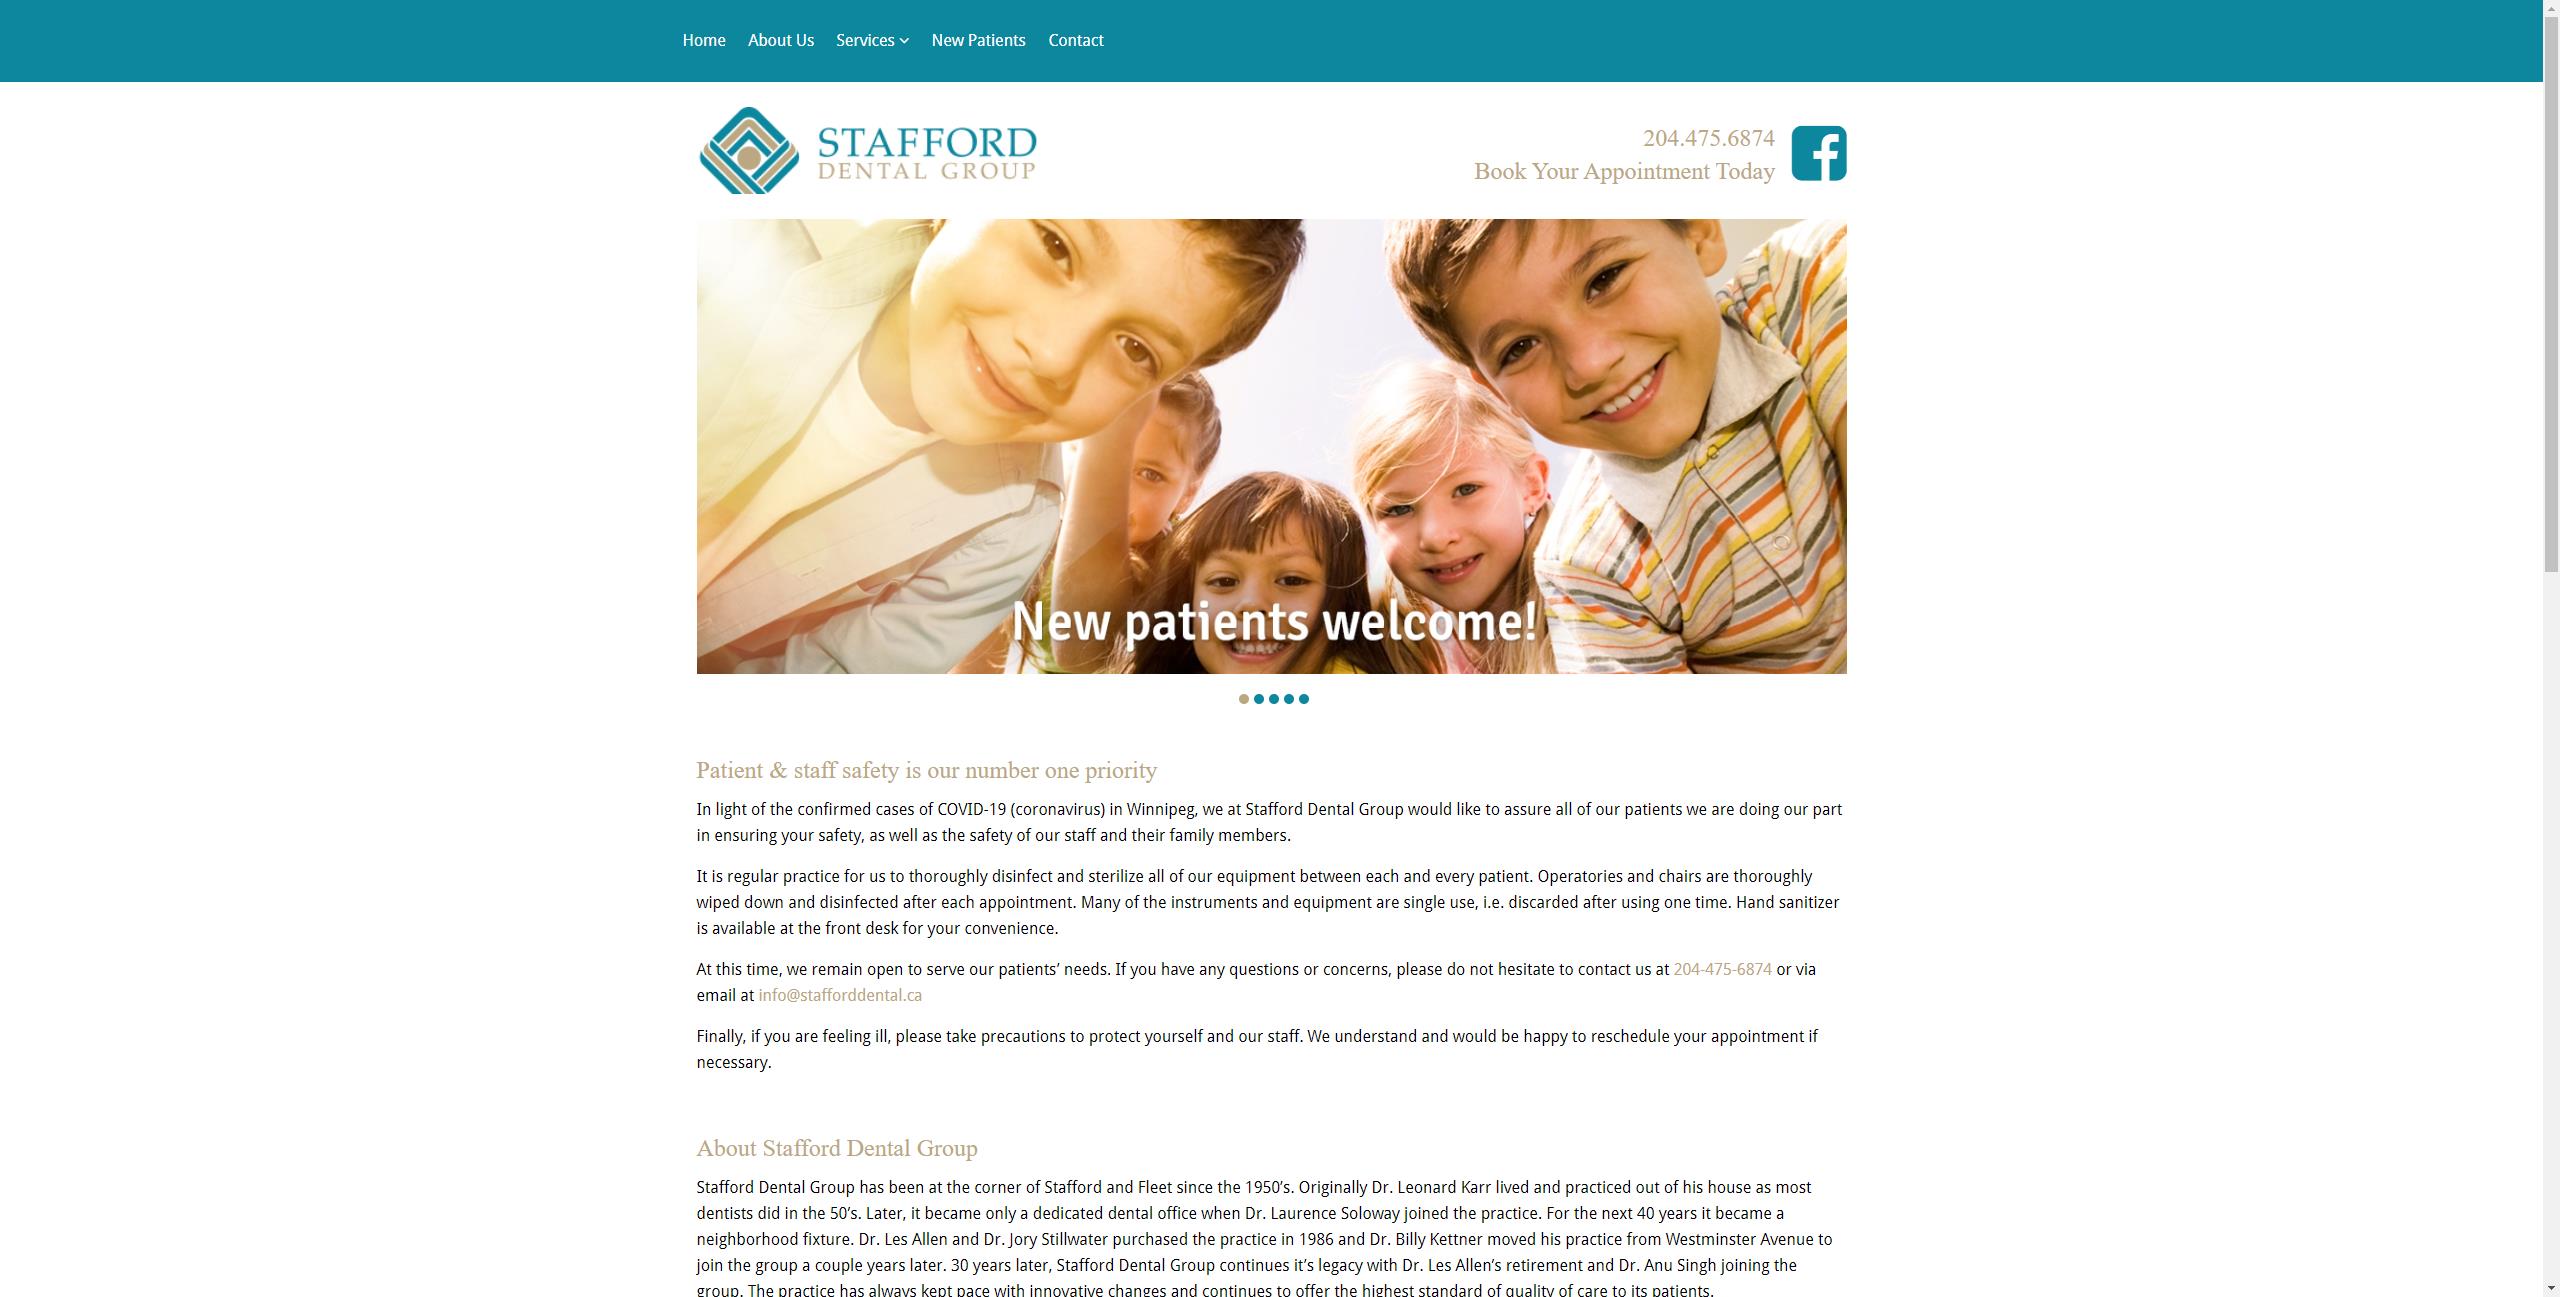 Stafford Dental Group website designed by 6P Marketing